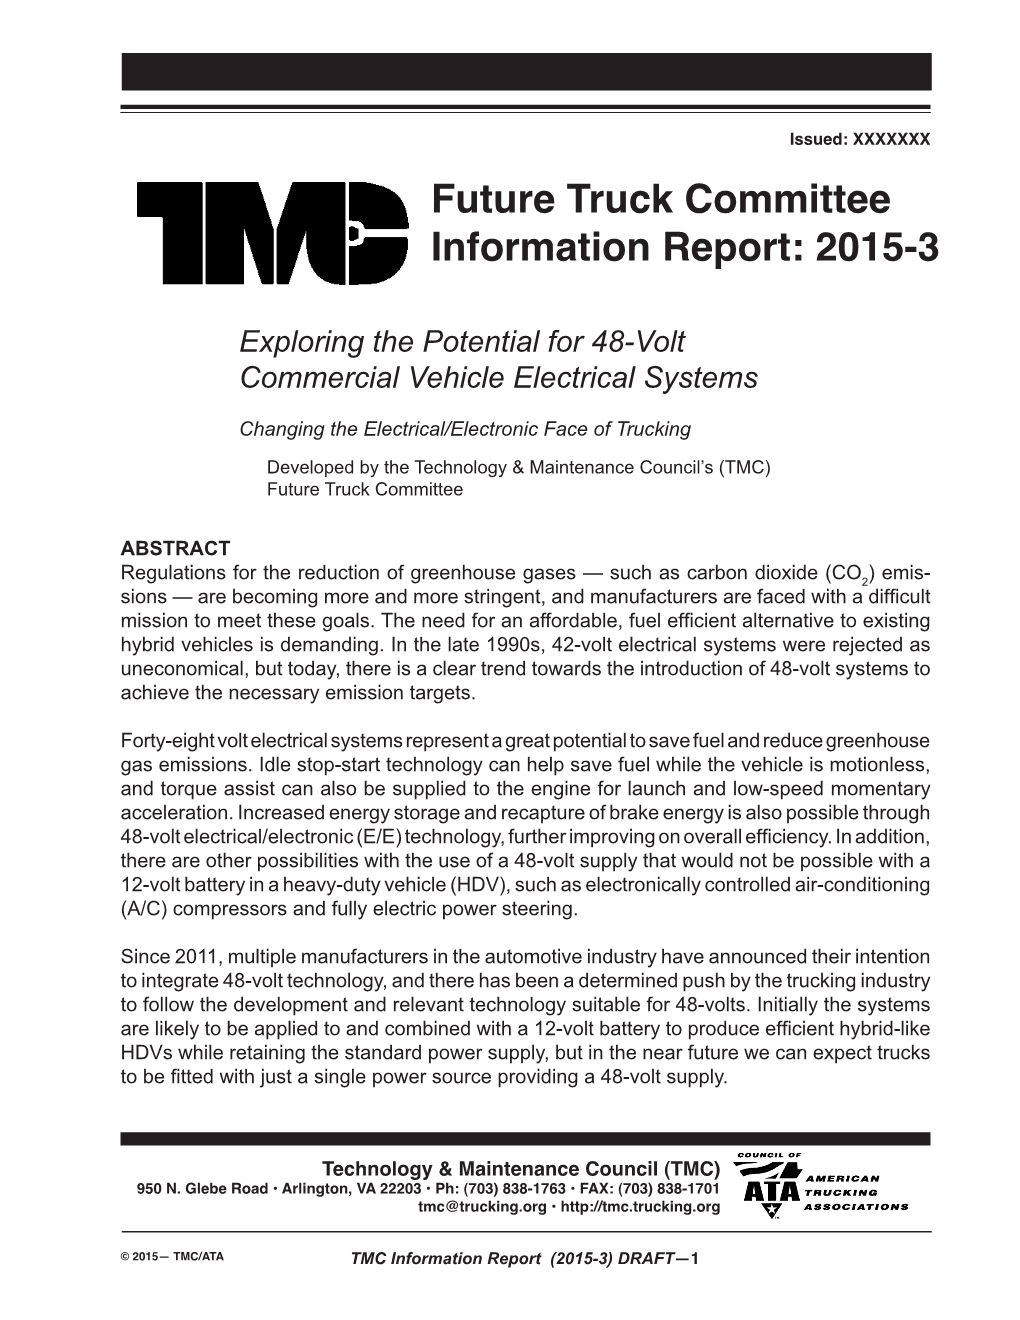 Future Truck Committee Information Report: 2015-3